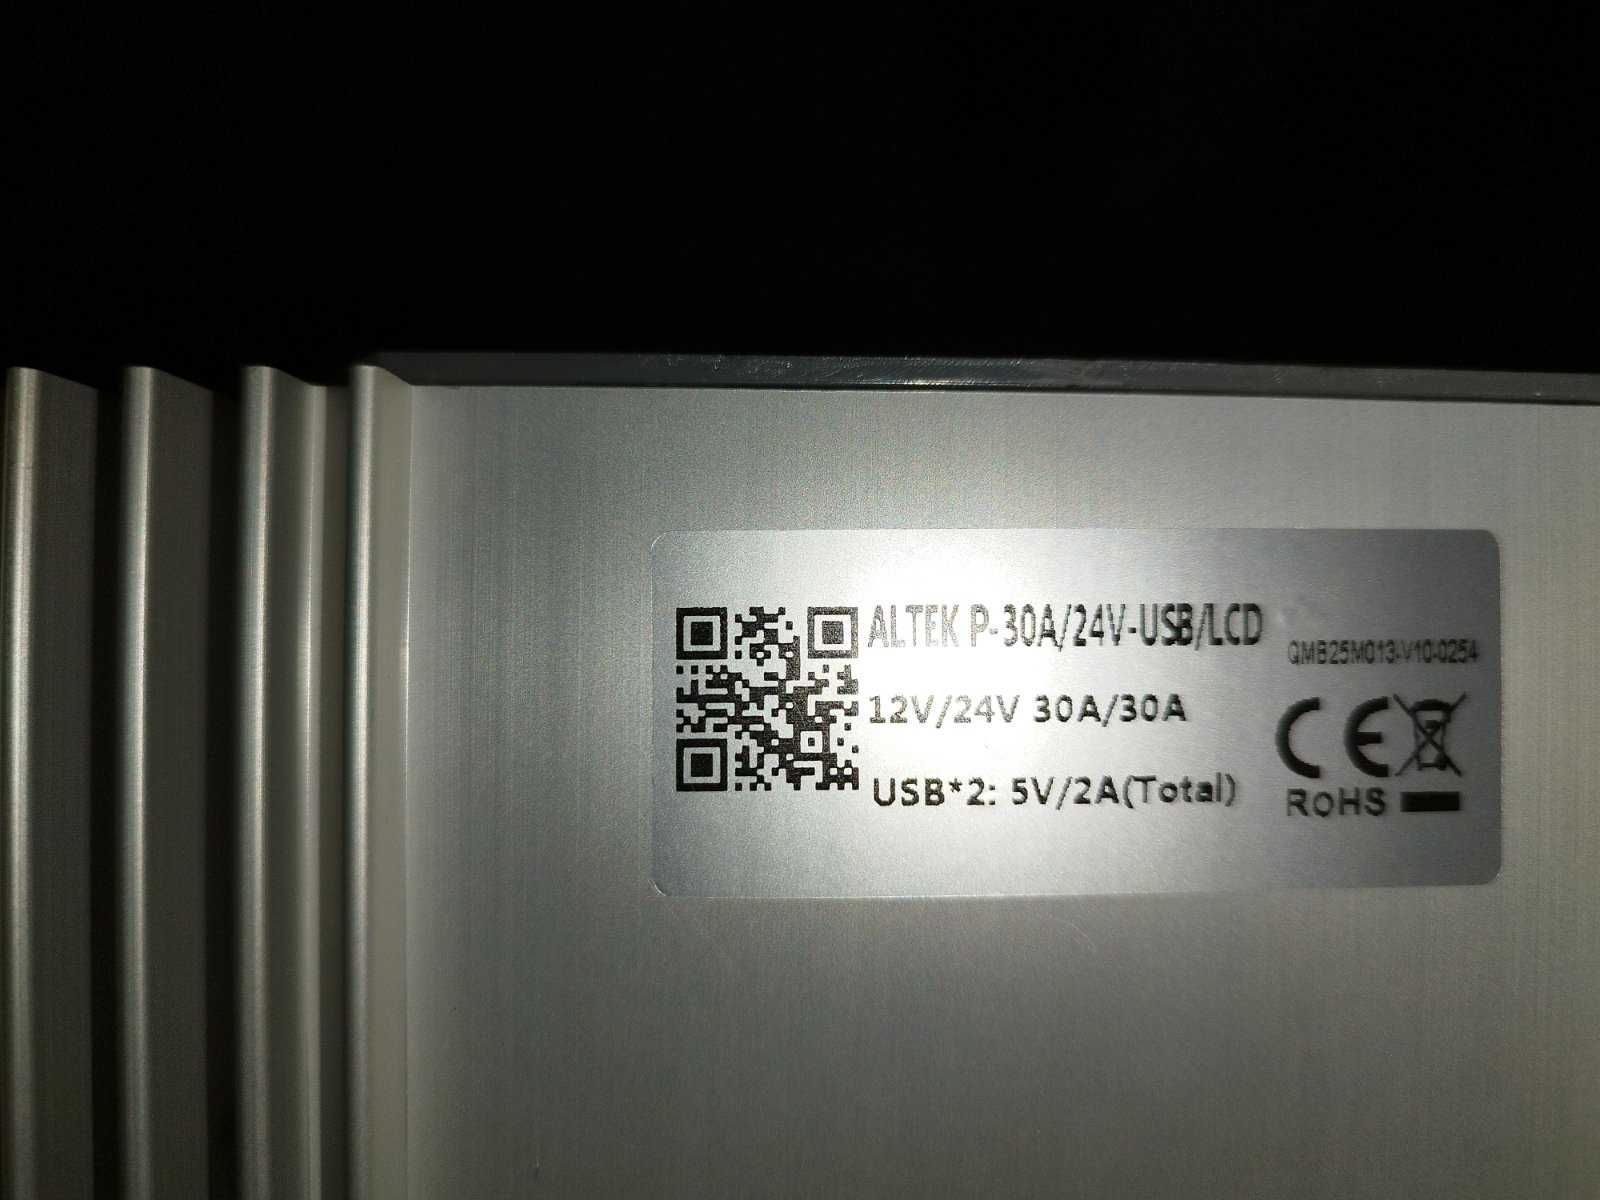 ALTEK P-30A/24V-USB/LCD. Контролер заряду для сонячних панелей дешево.